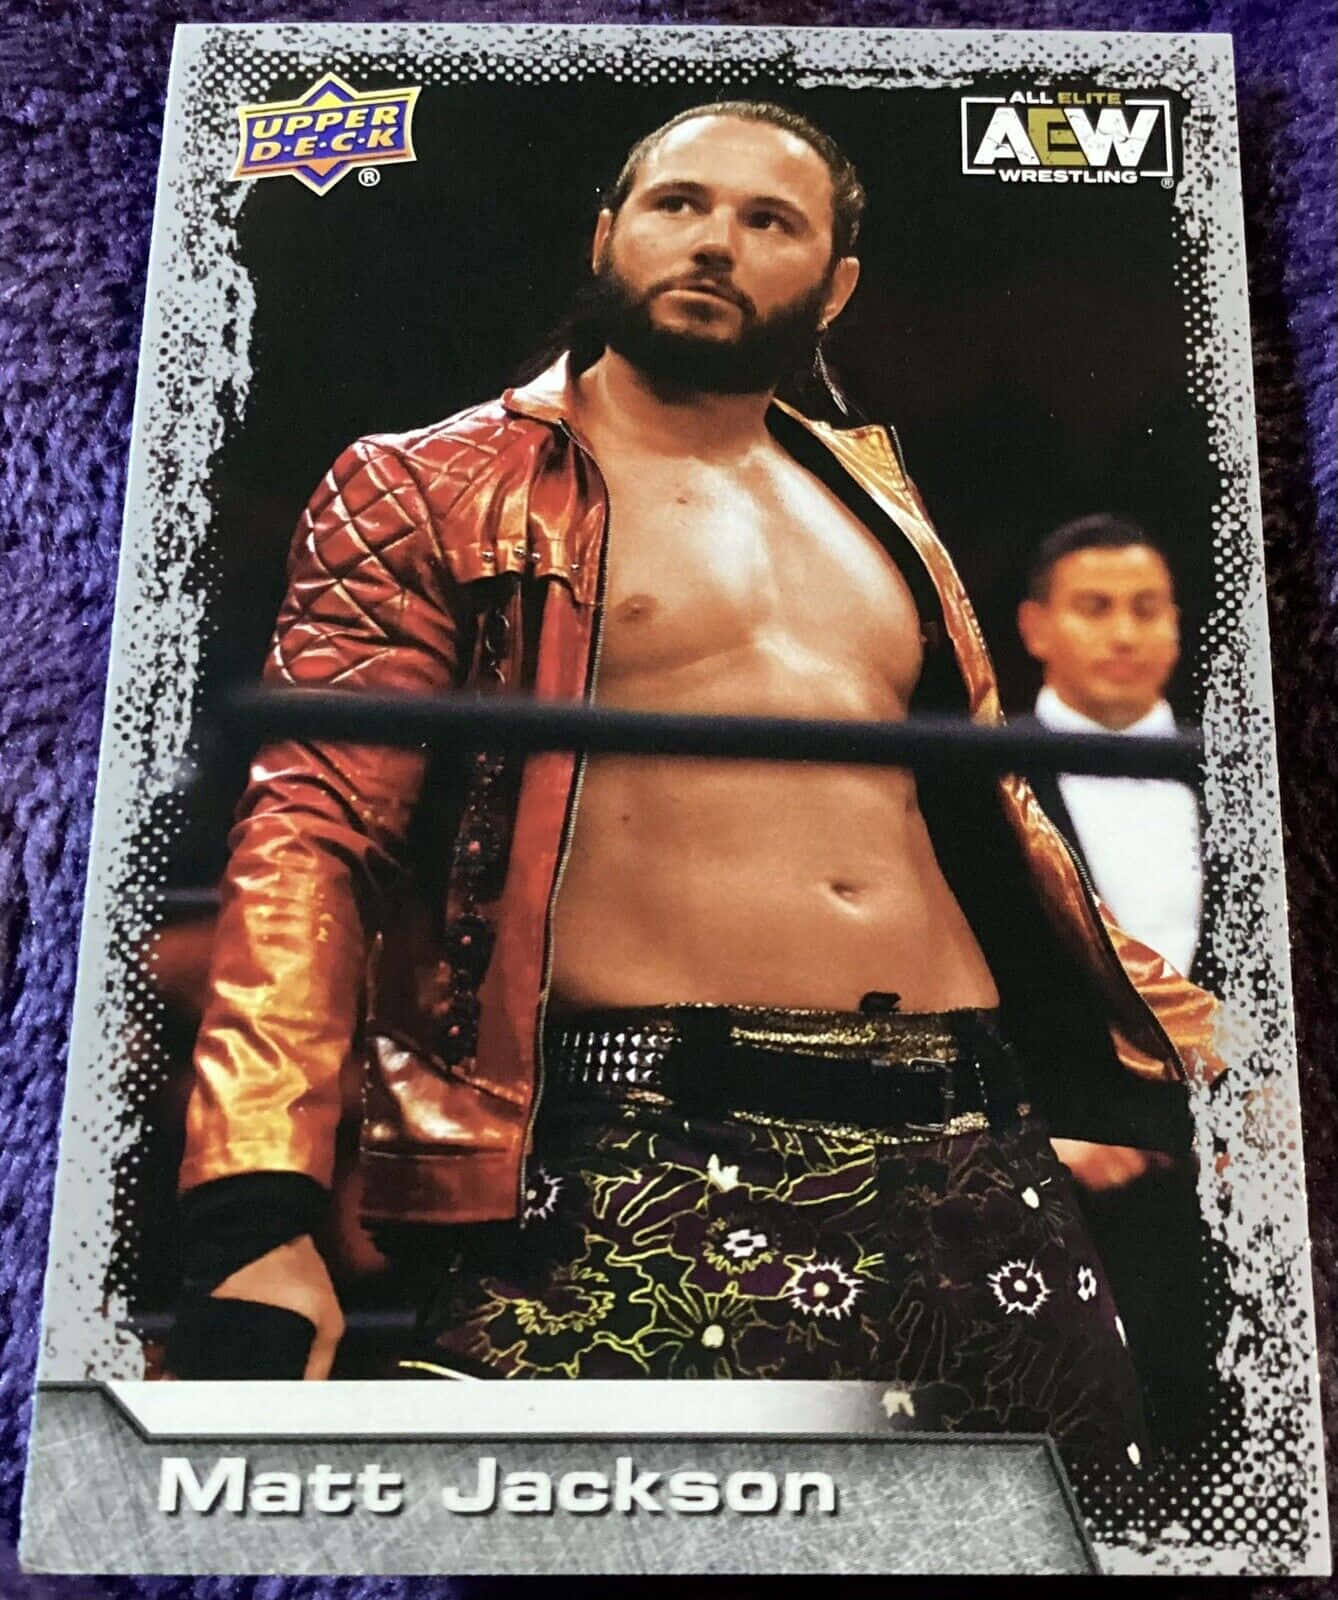 American Professional Wrestler Matt Jackson Upper Deck Trading Card Background